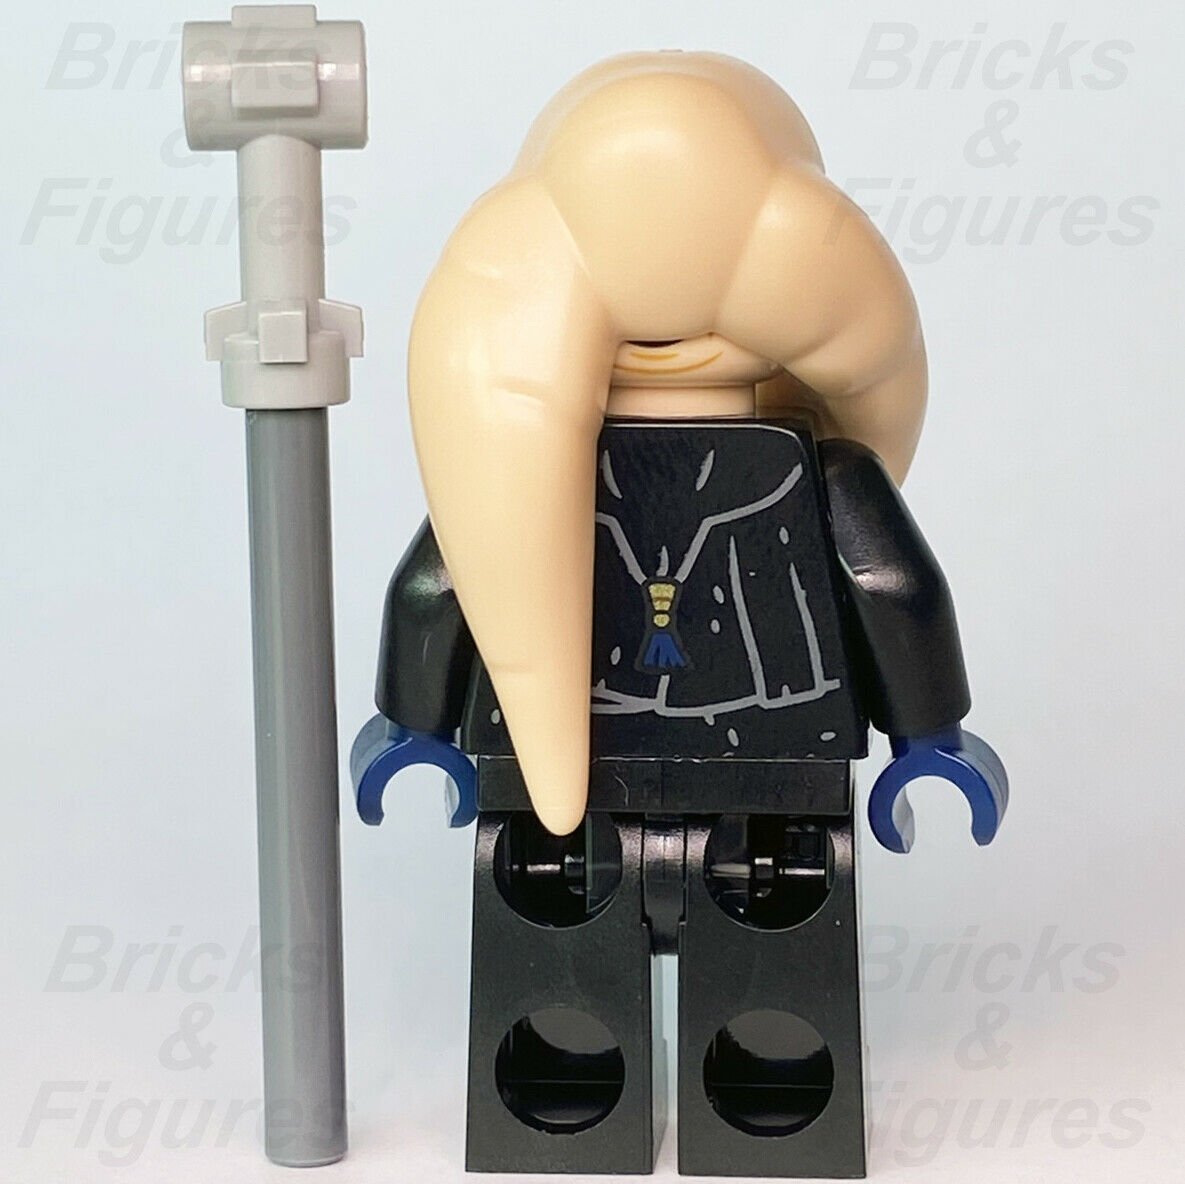 New Star Wars LEGO Bib Fortuna The Book of Boba Fett Minifigure 75326 sw1193 - Bricks & Figures